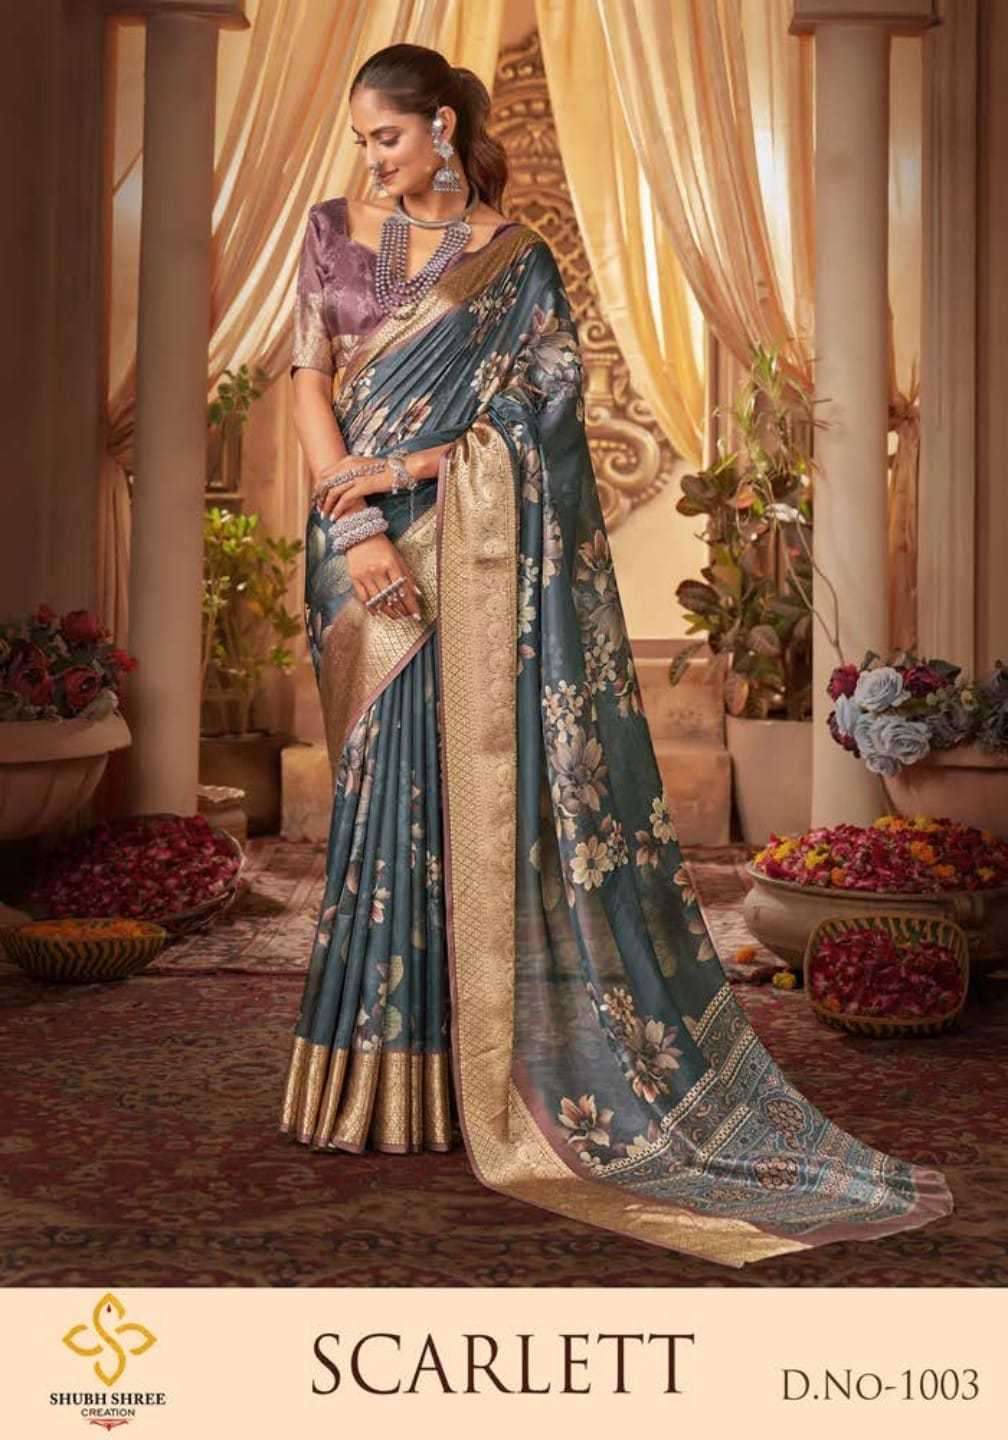 shubh shree creation scarlett series 1001-1010 velvet tussar silk saree